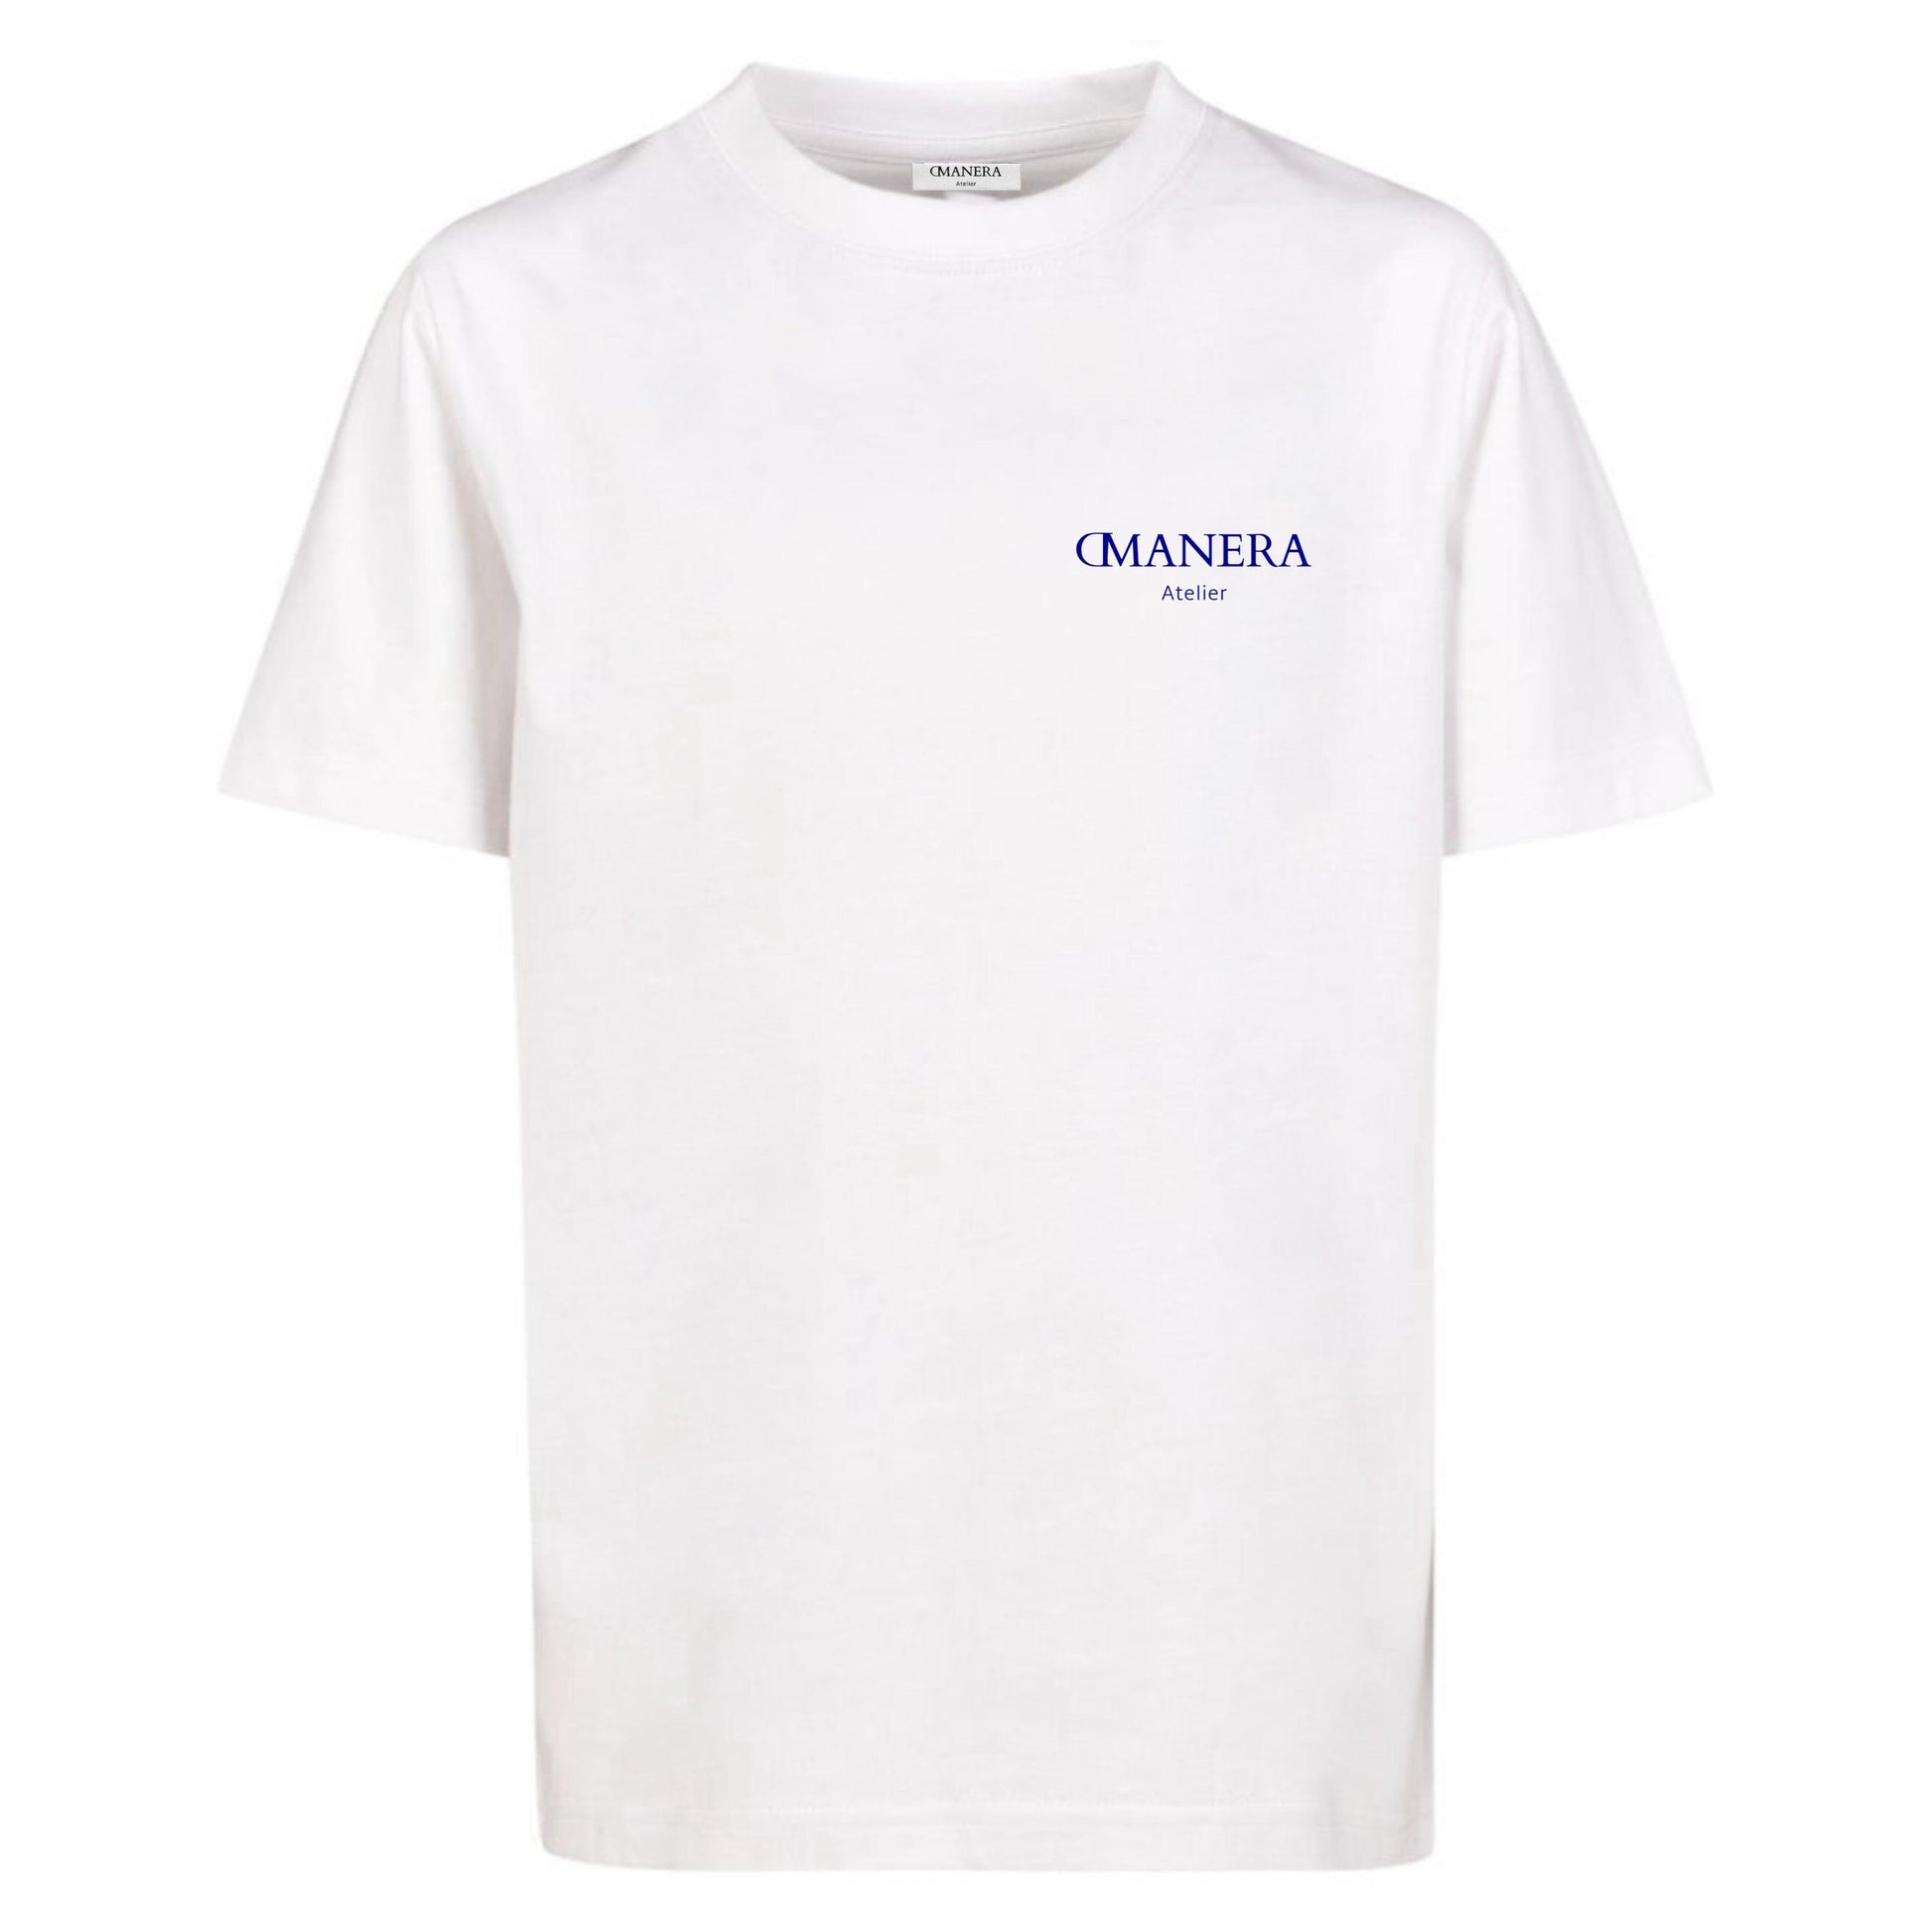 Oversize Shirt White/Navy 240 g/m² - DMANERA Atelier